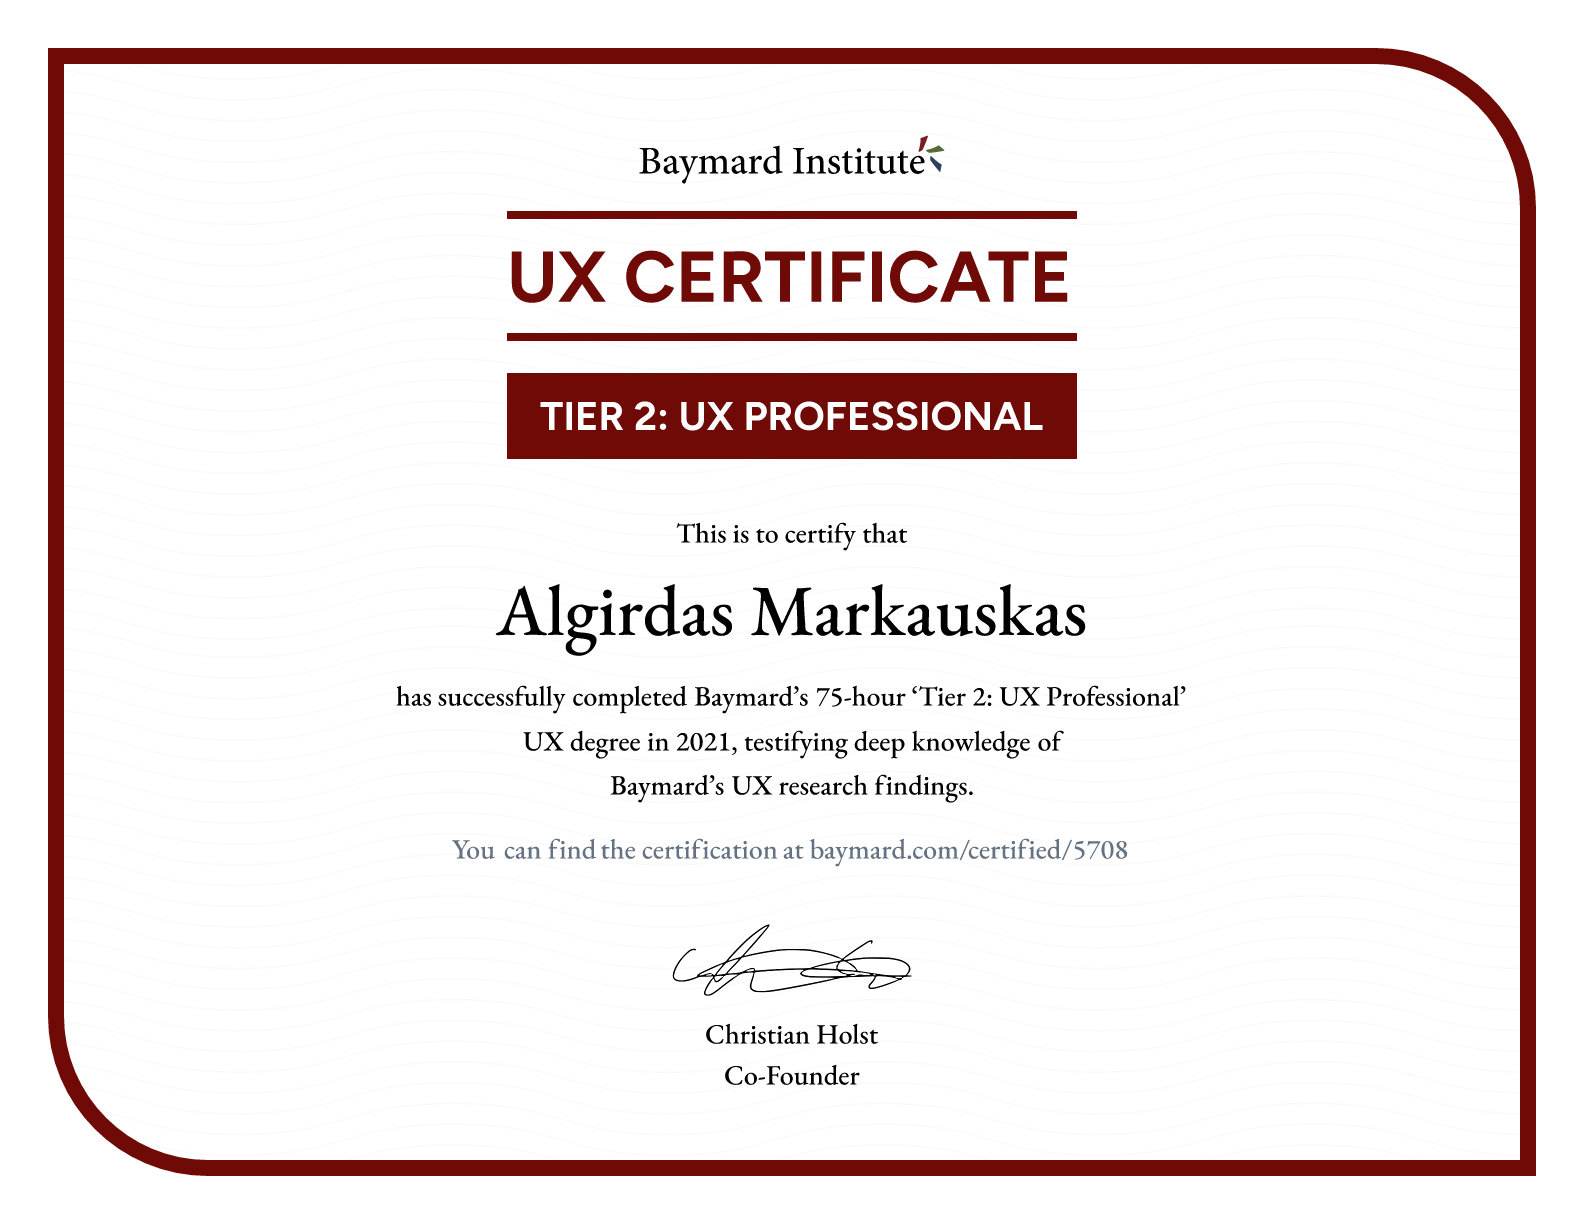 Algirdas Markauskas’s certificate